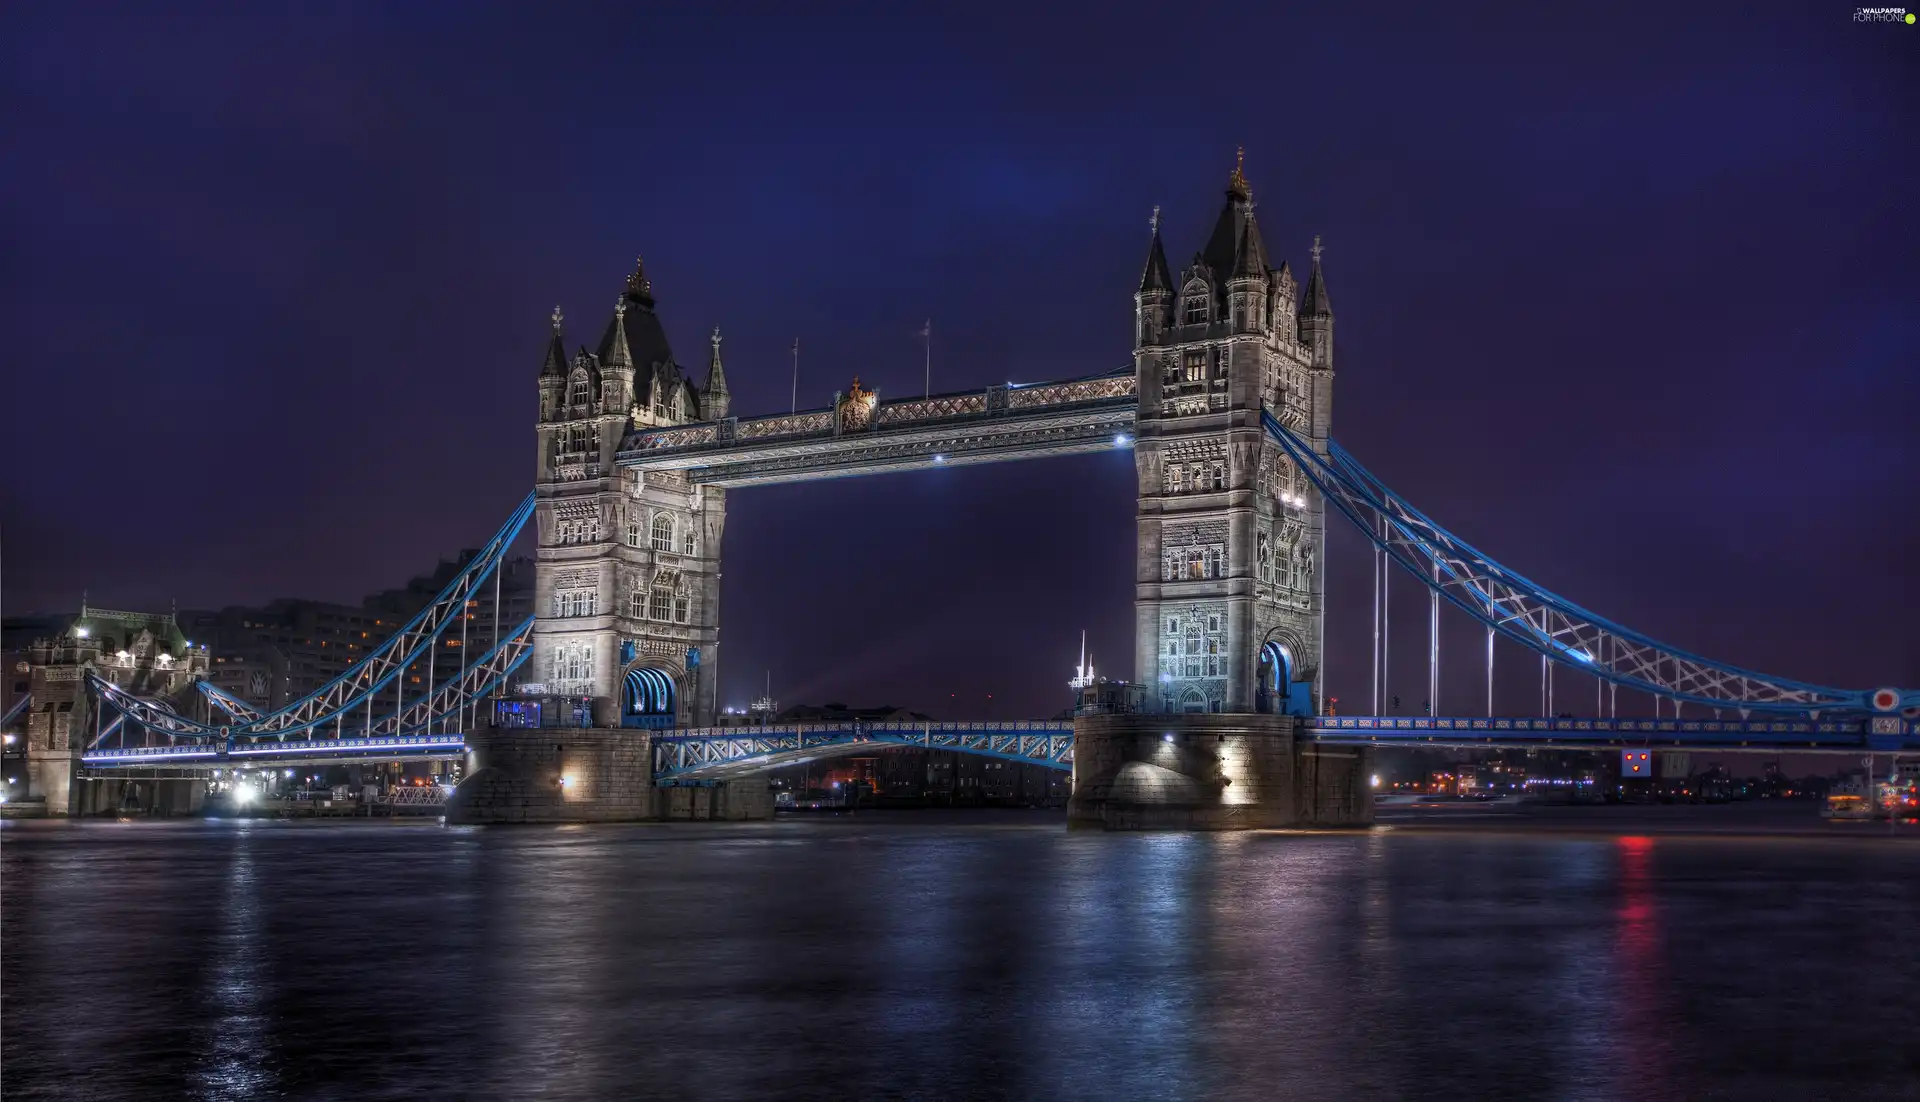 England, Tower Bridge, City at Night, London